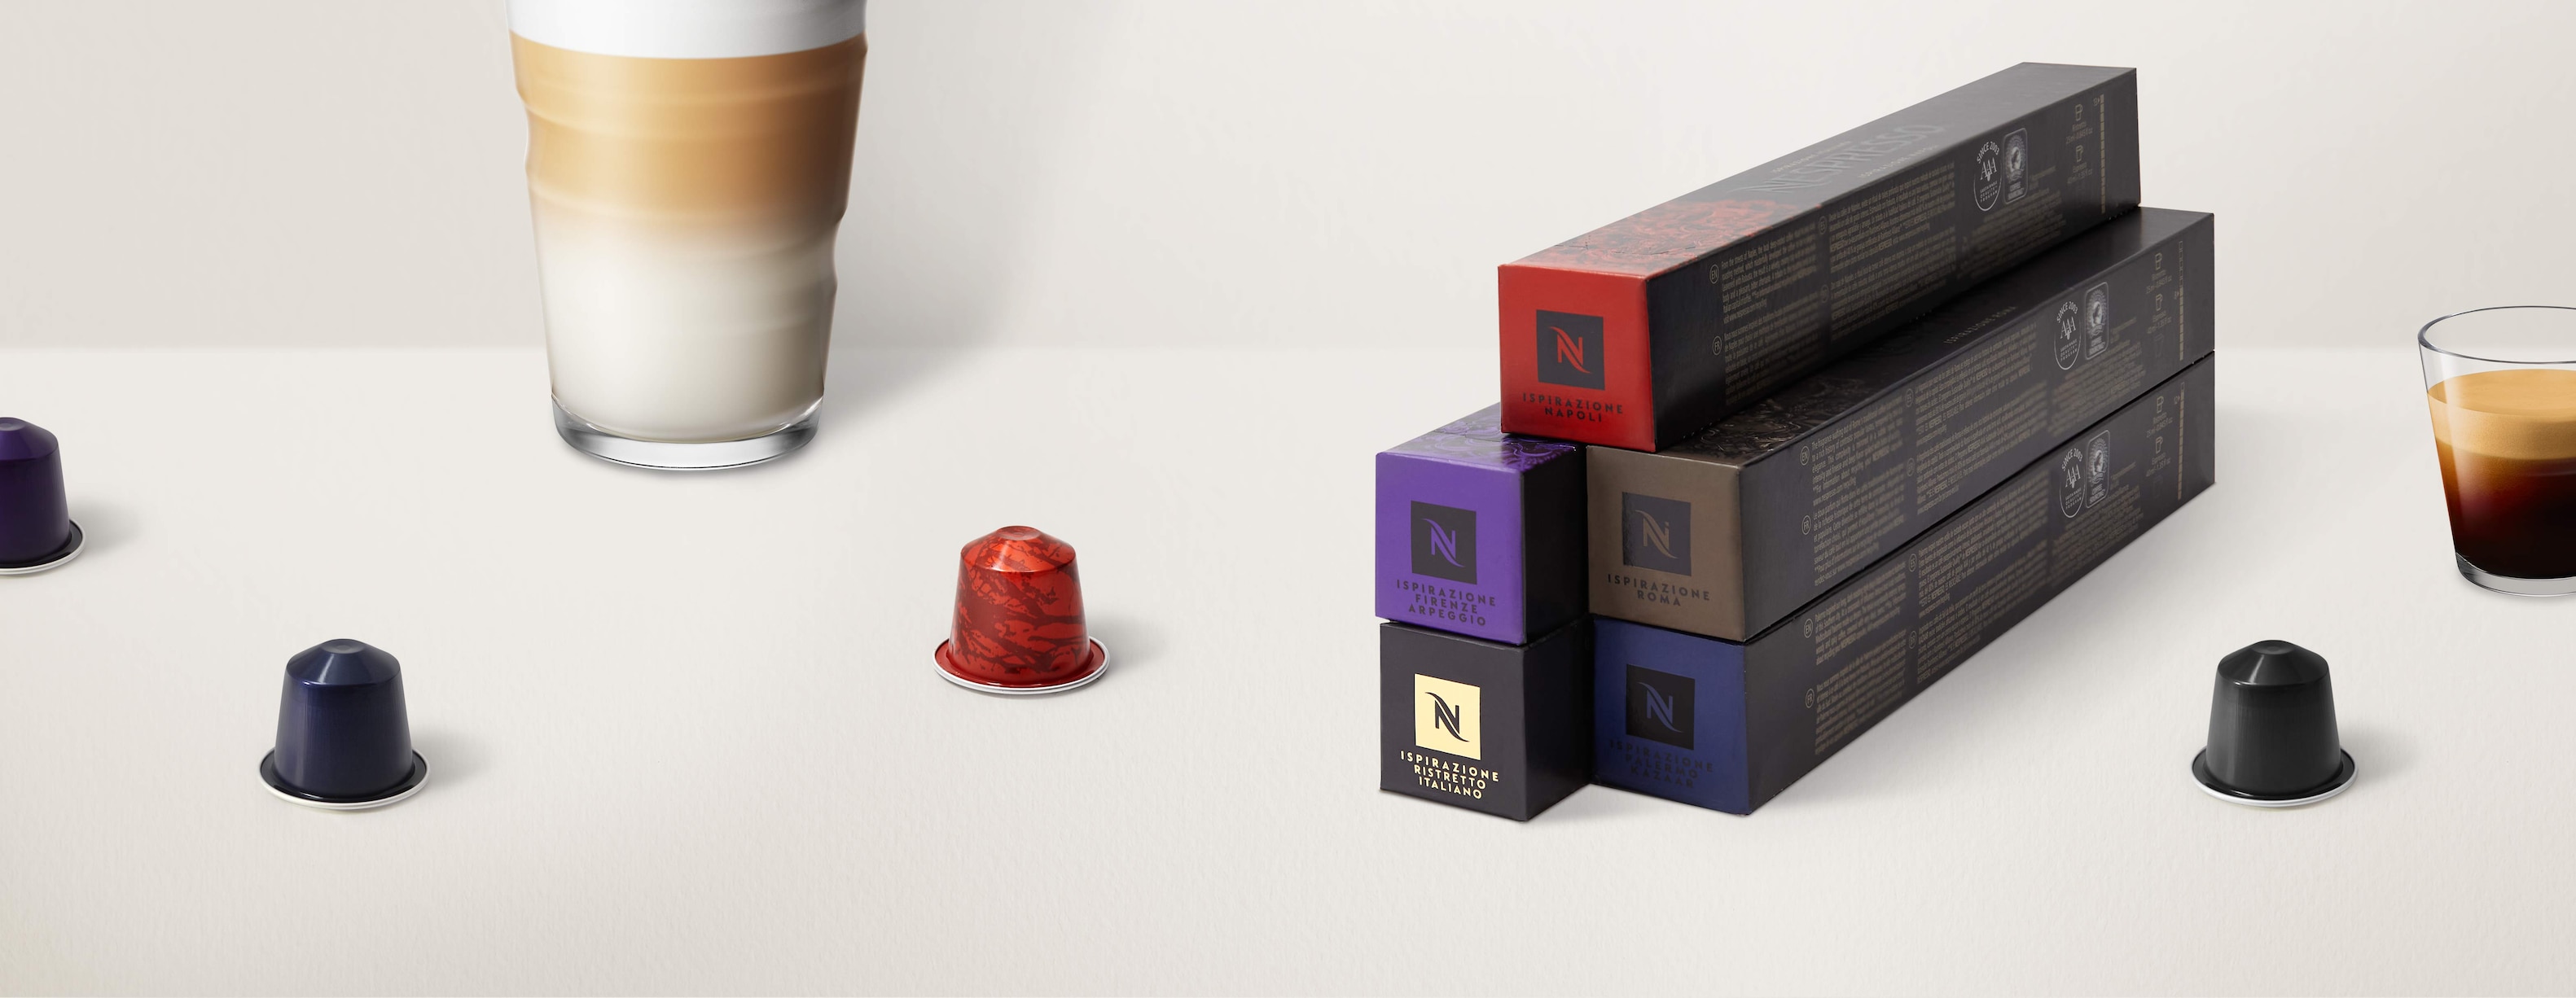 Nestle tea capsules debut - Packaging MEA